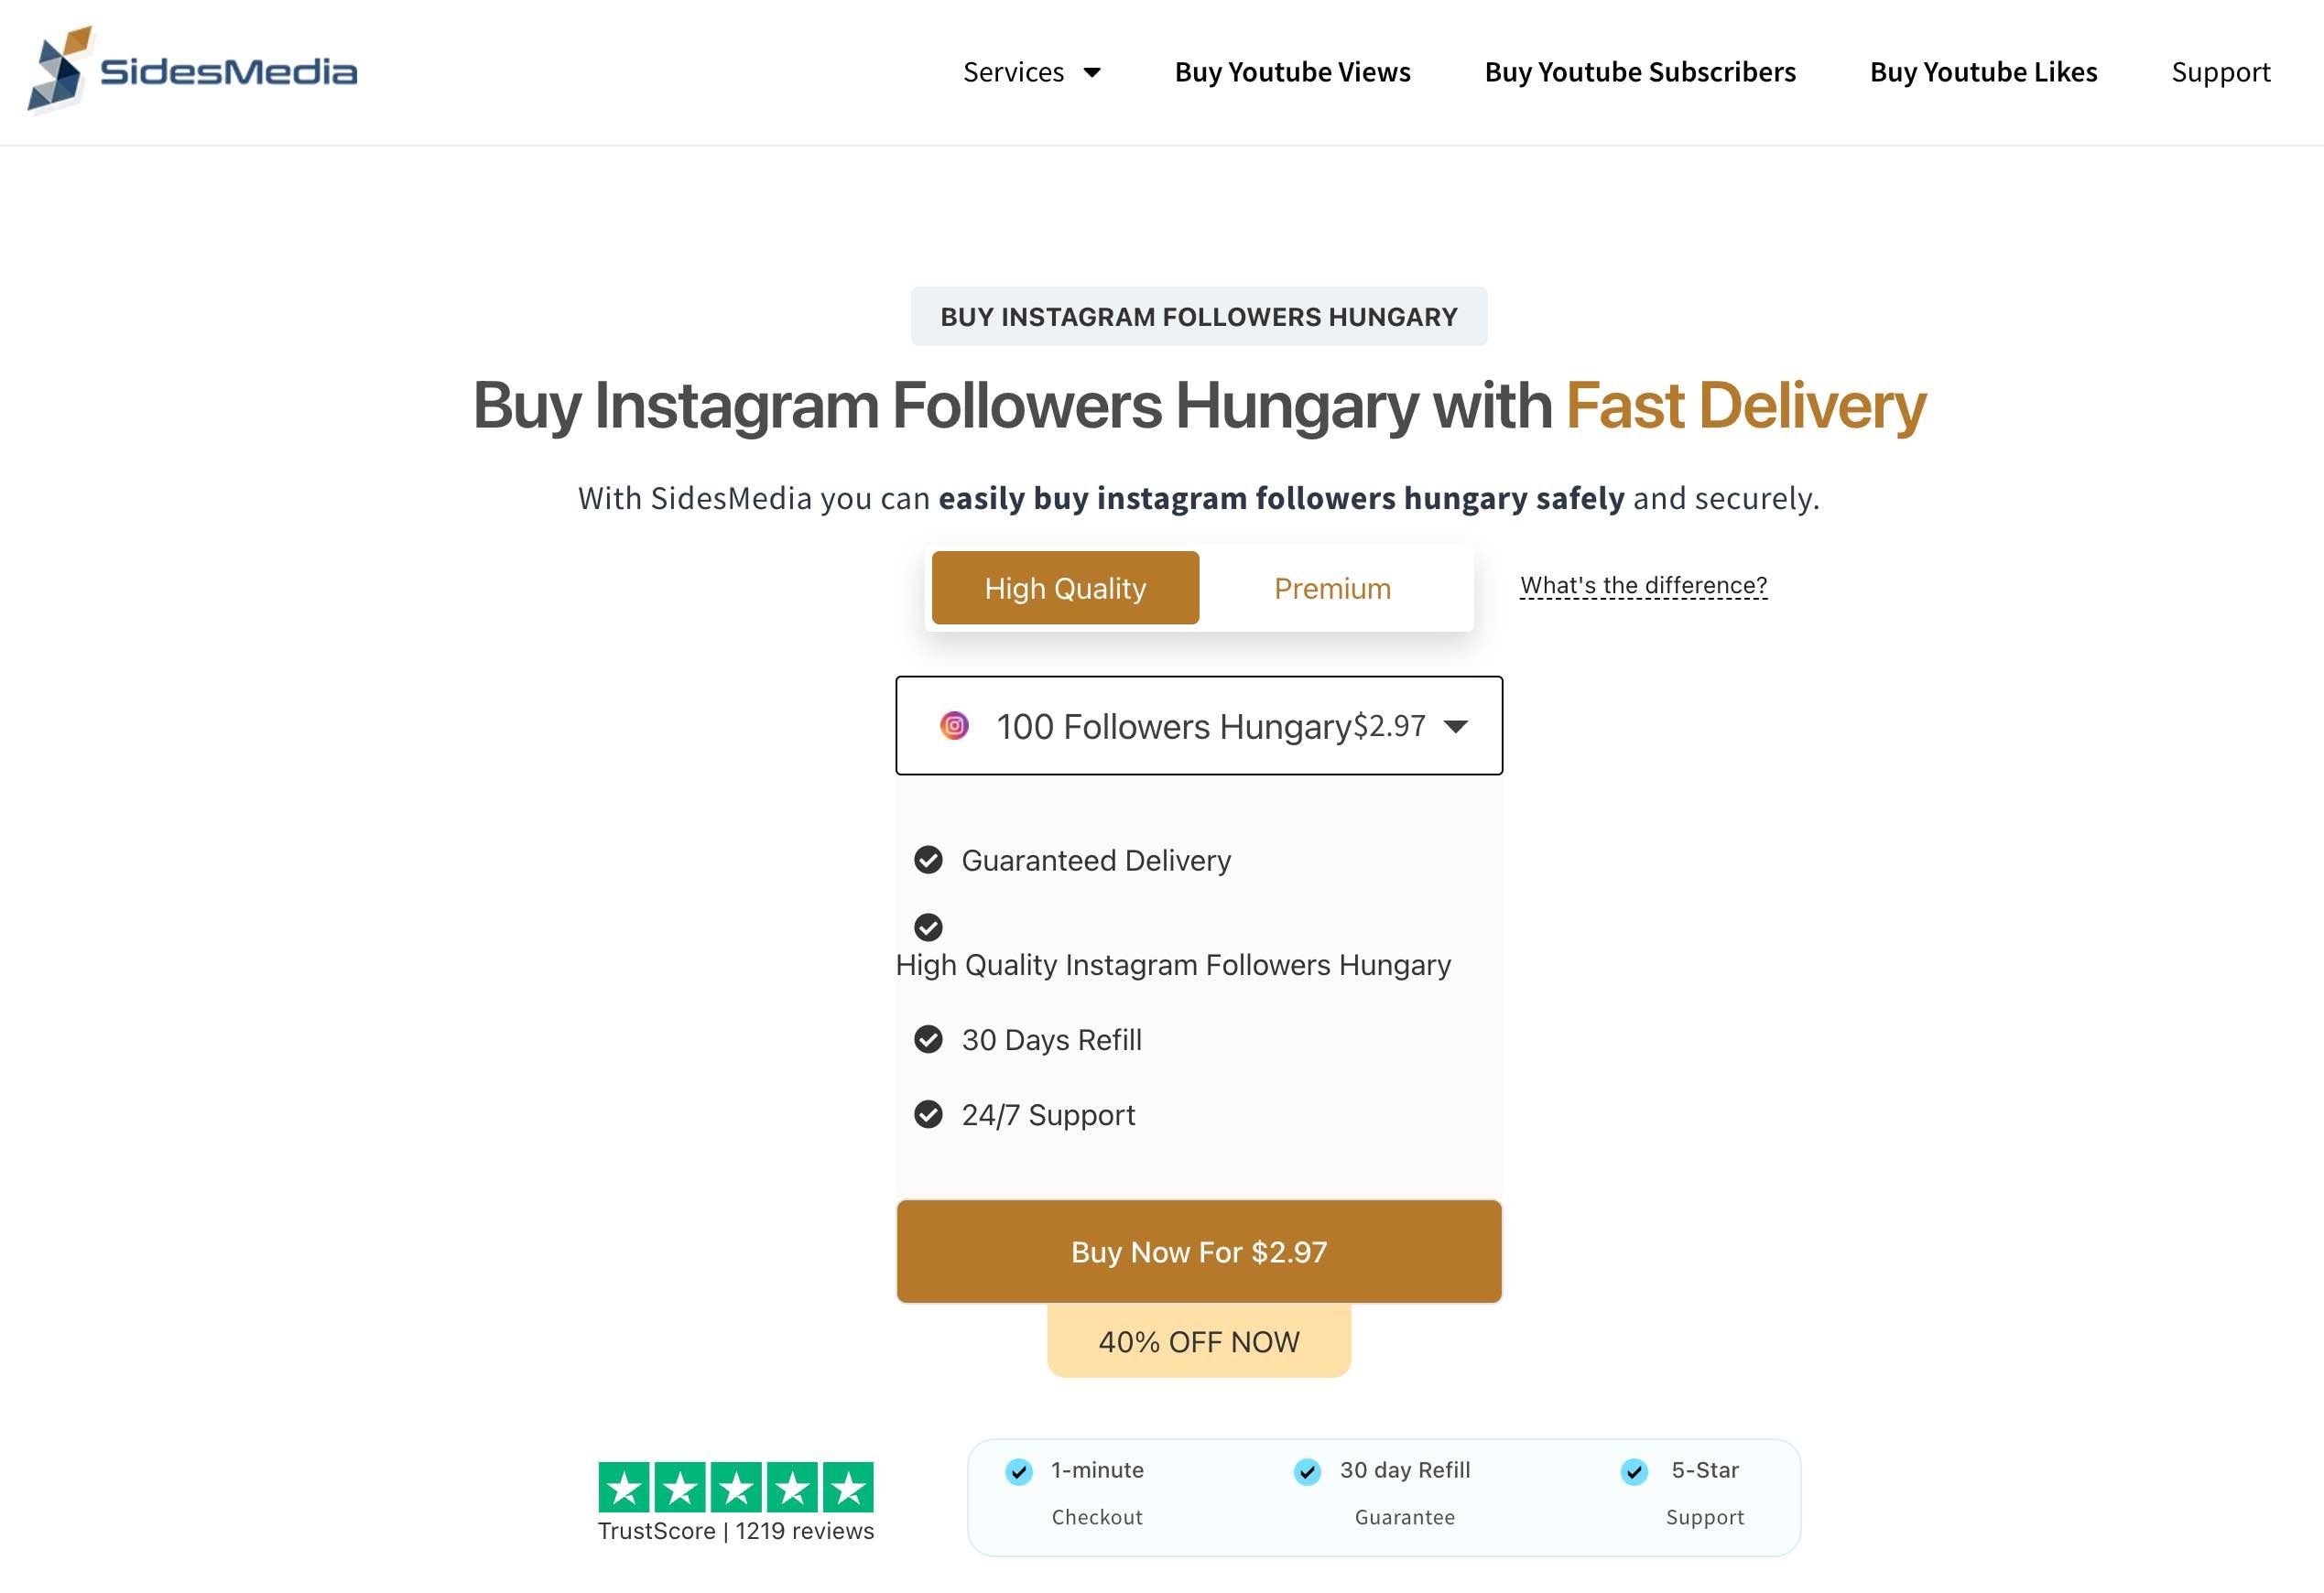 sidesmedia buy instagram followers hungary page